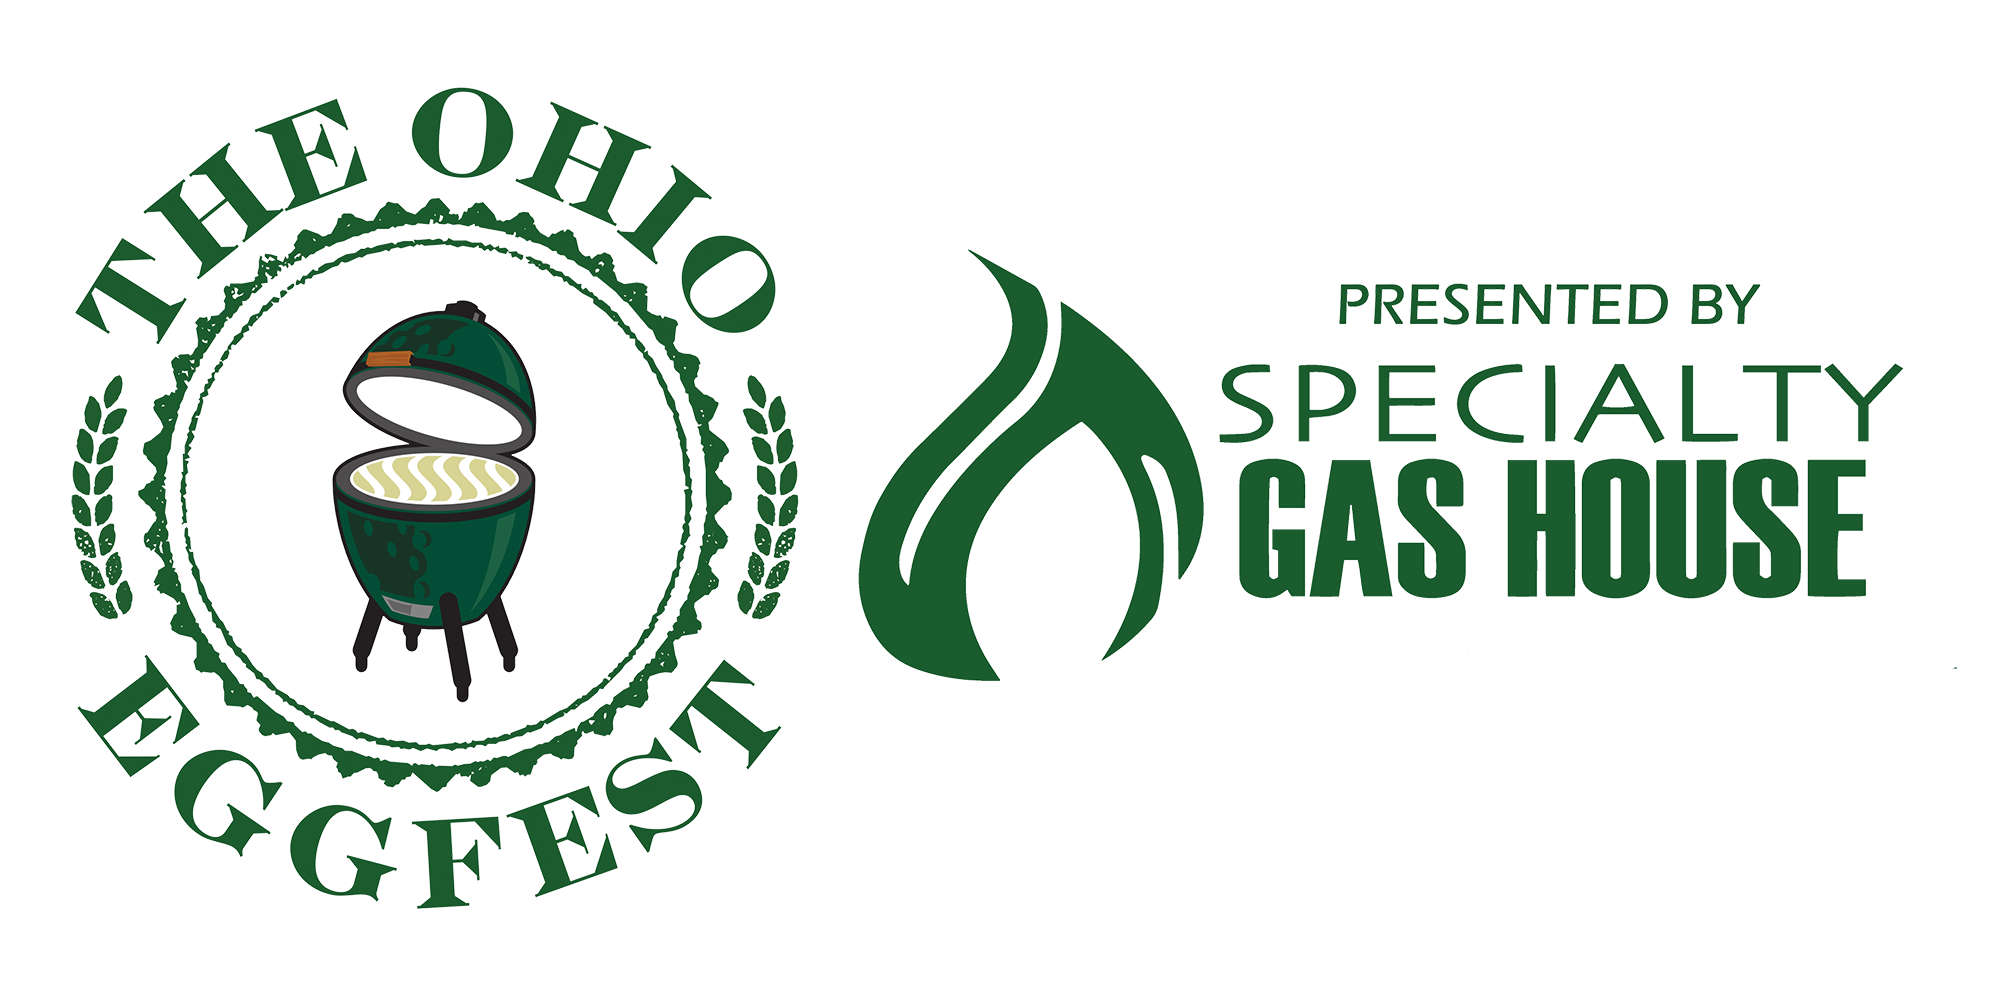 the ohio eggfest logo specialty gas house big green egg festival